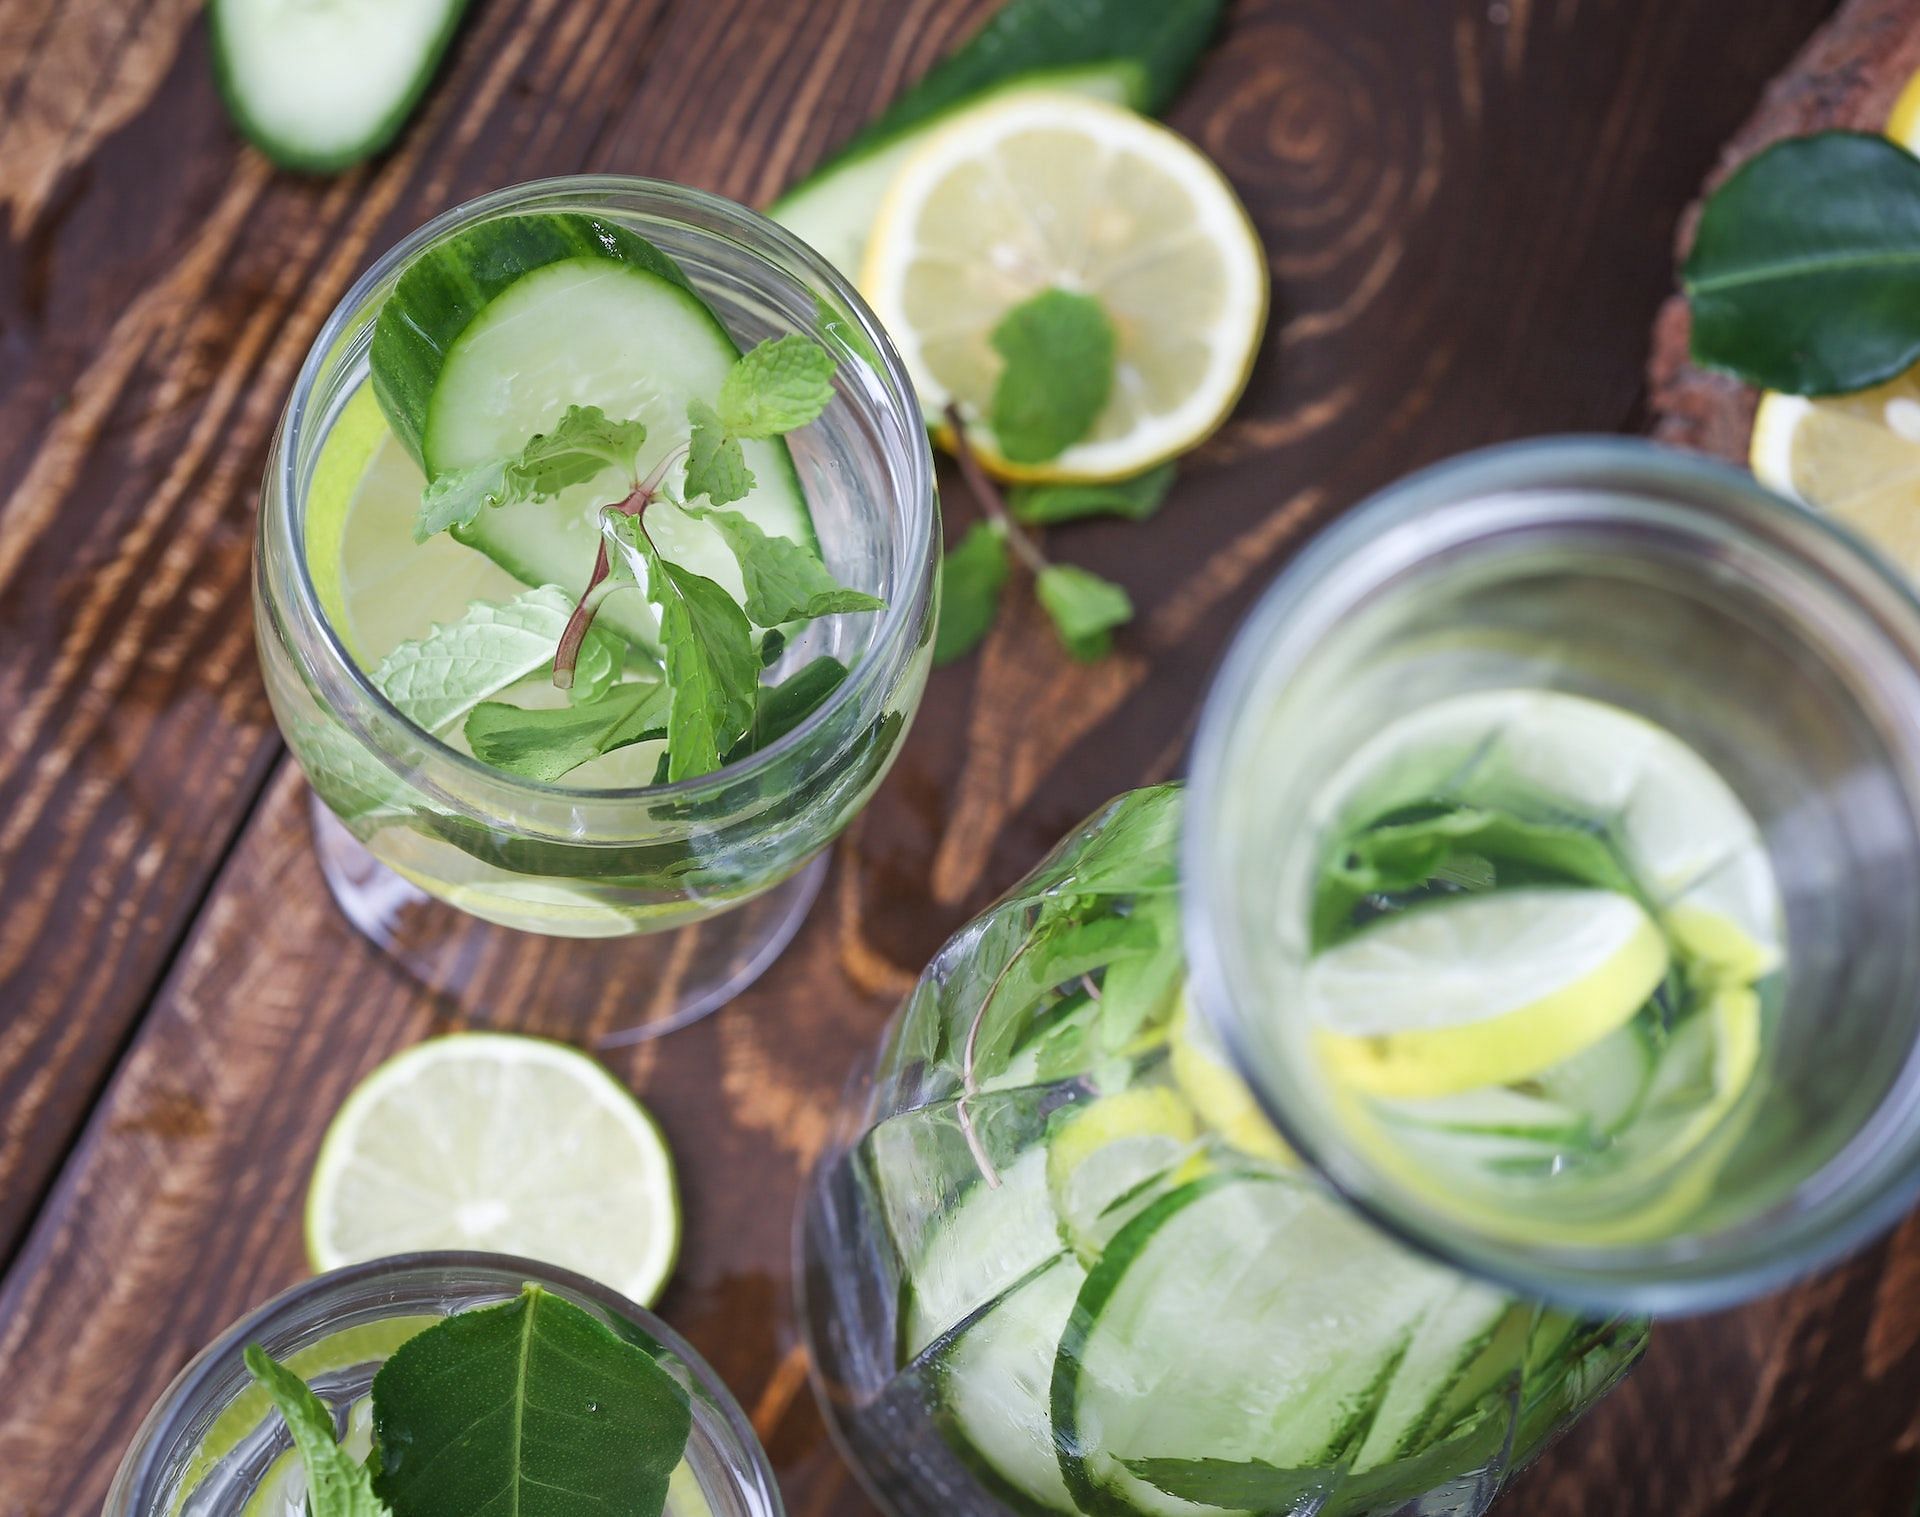 Cucumber water offers several health benefits. (Photo via Pexels/Shameel mukkath)